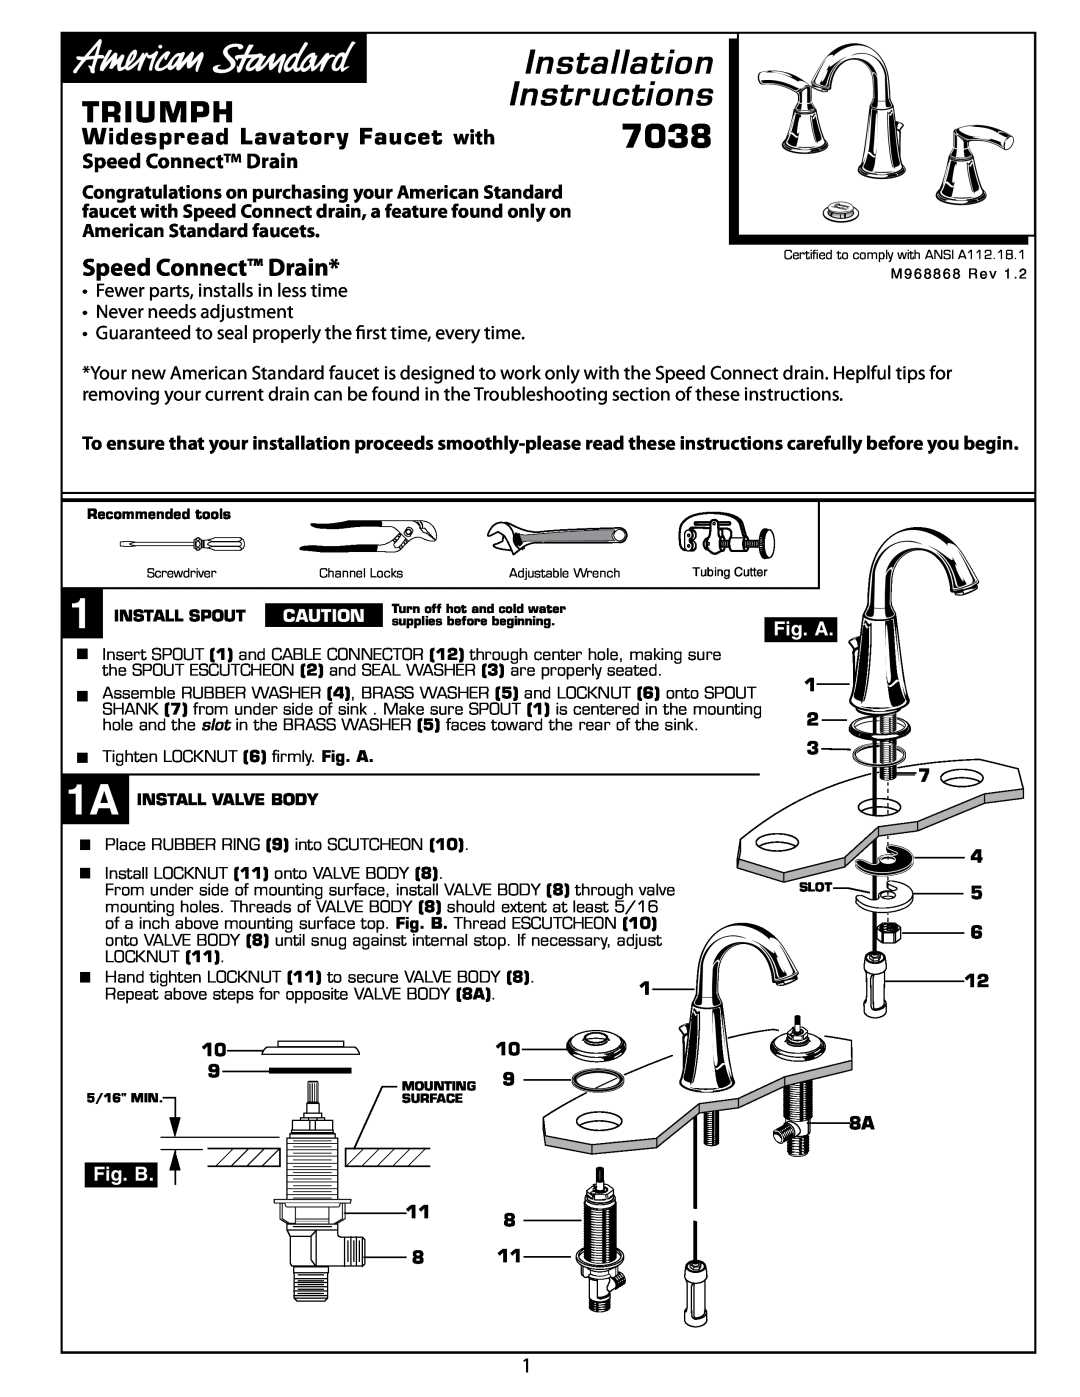 American Standard 7038 installation instructions Speed Connect Drain, Installation, Instructions, Triumph, Fig. A, Fig. B 